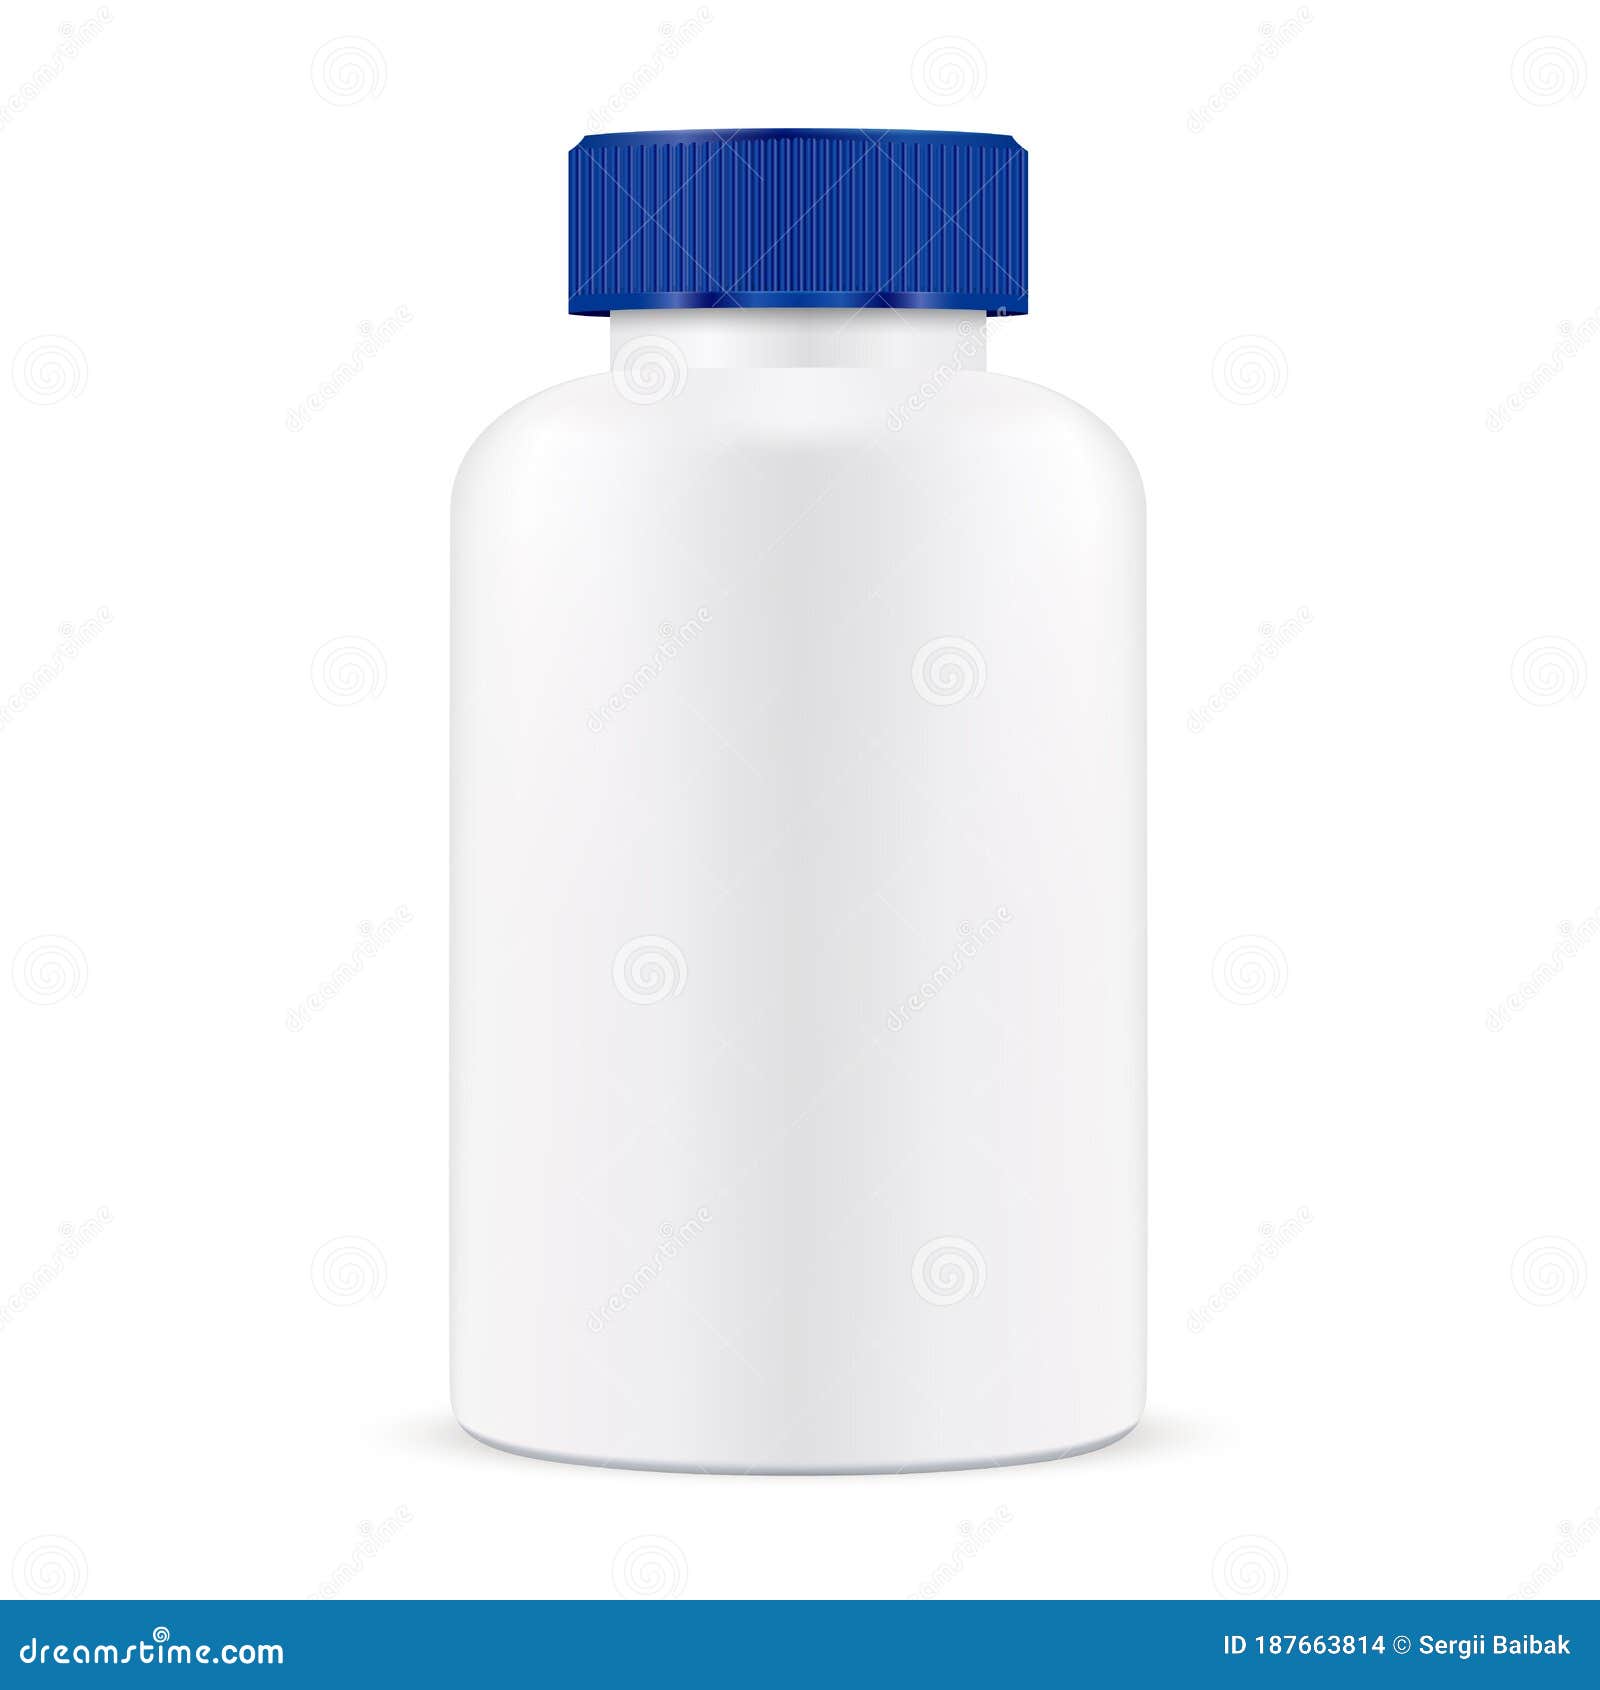 Download Pill Bottle Blue Lid Plastic Medicine Container Stock Vector Illustration Of Capsule Aspirin 187663814